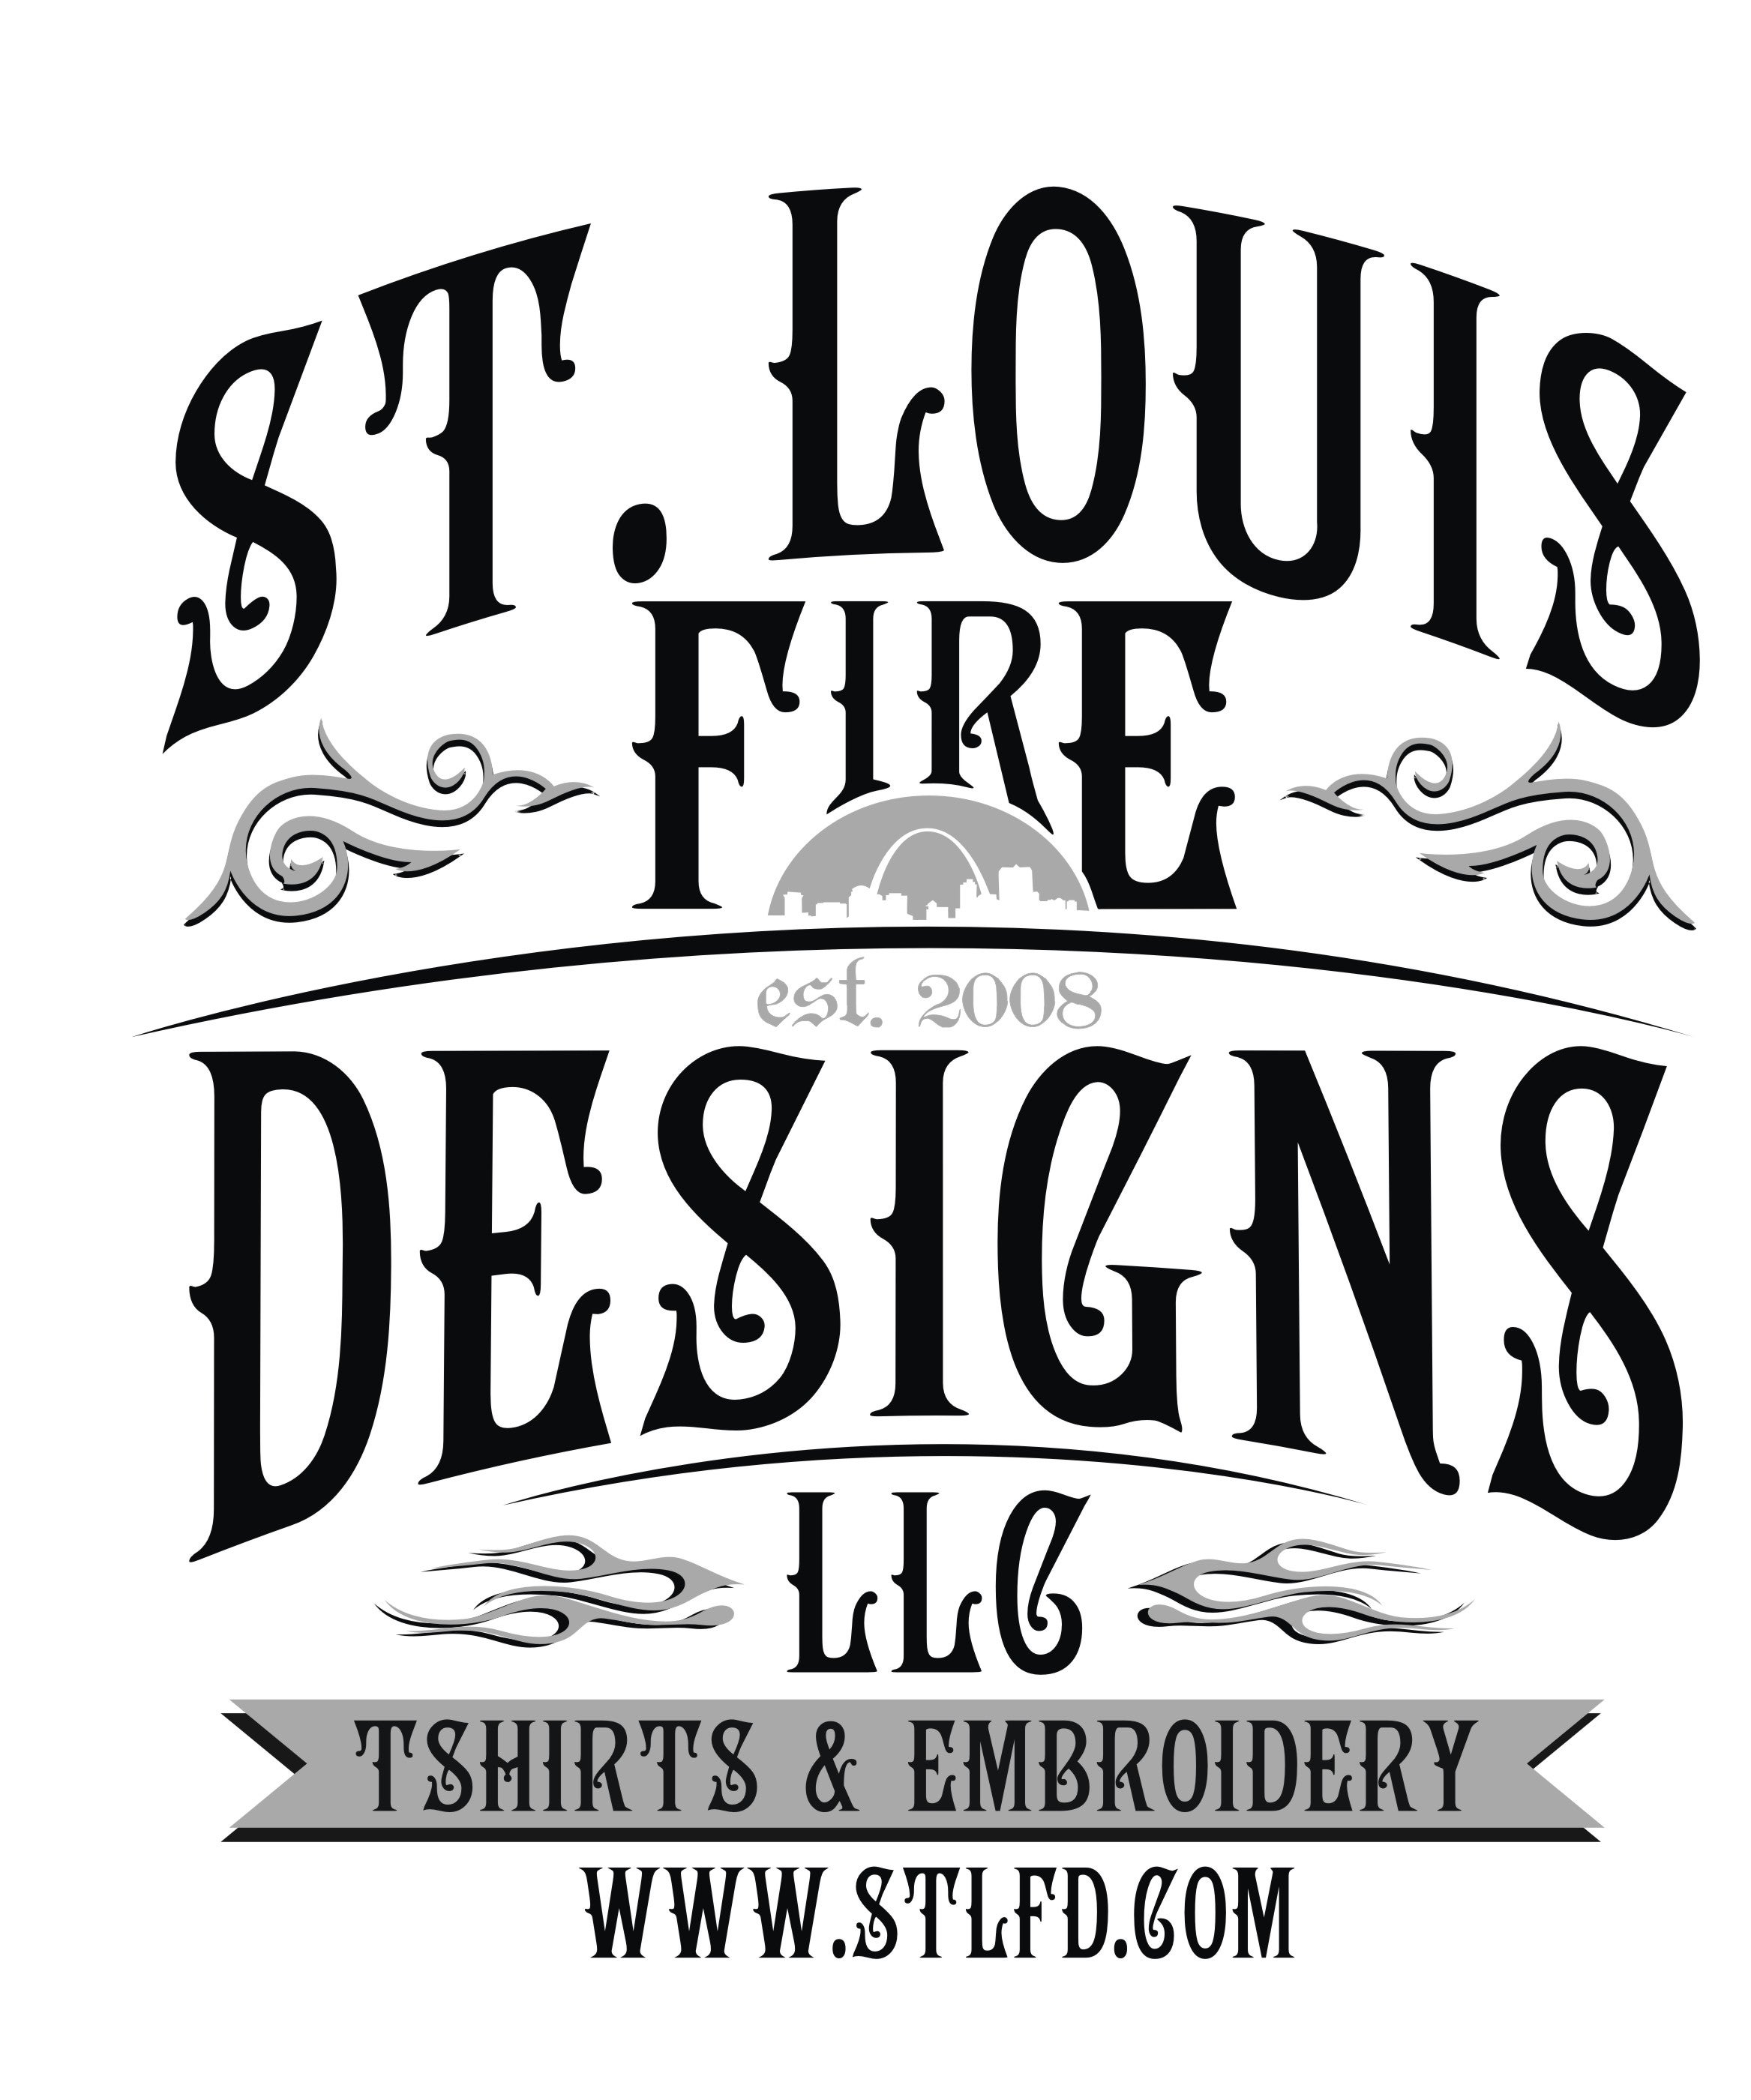 Home  St. Louis Fire Designs